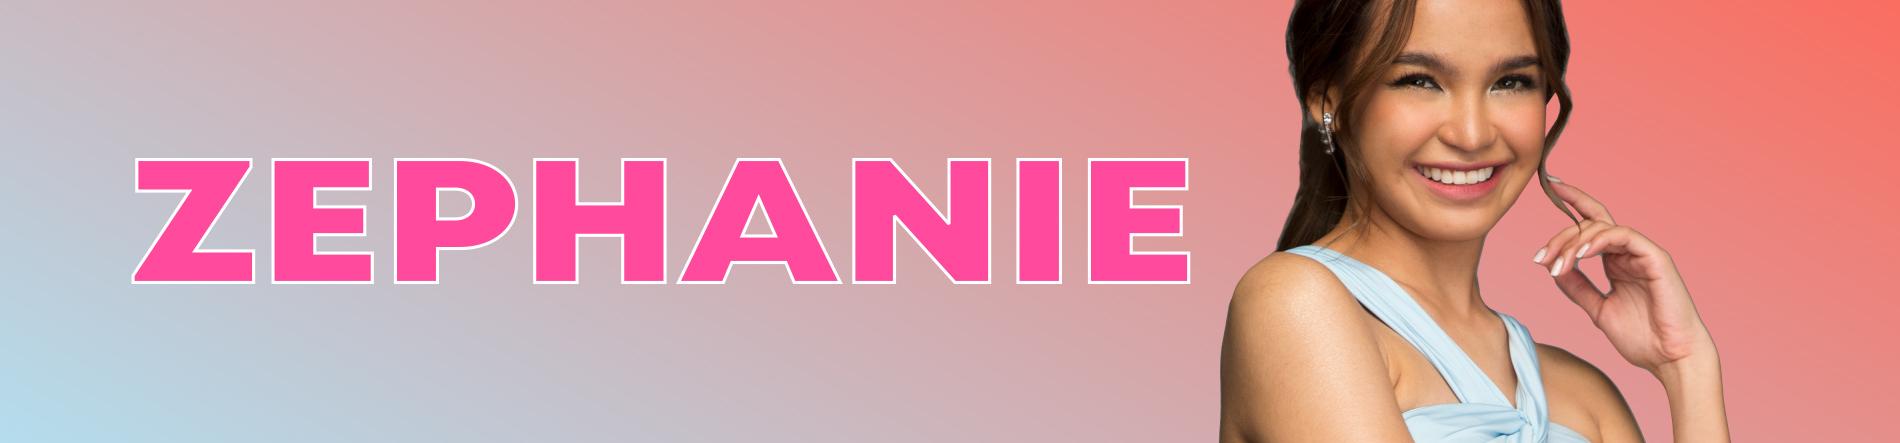 Zephanie Desktop Banner